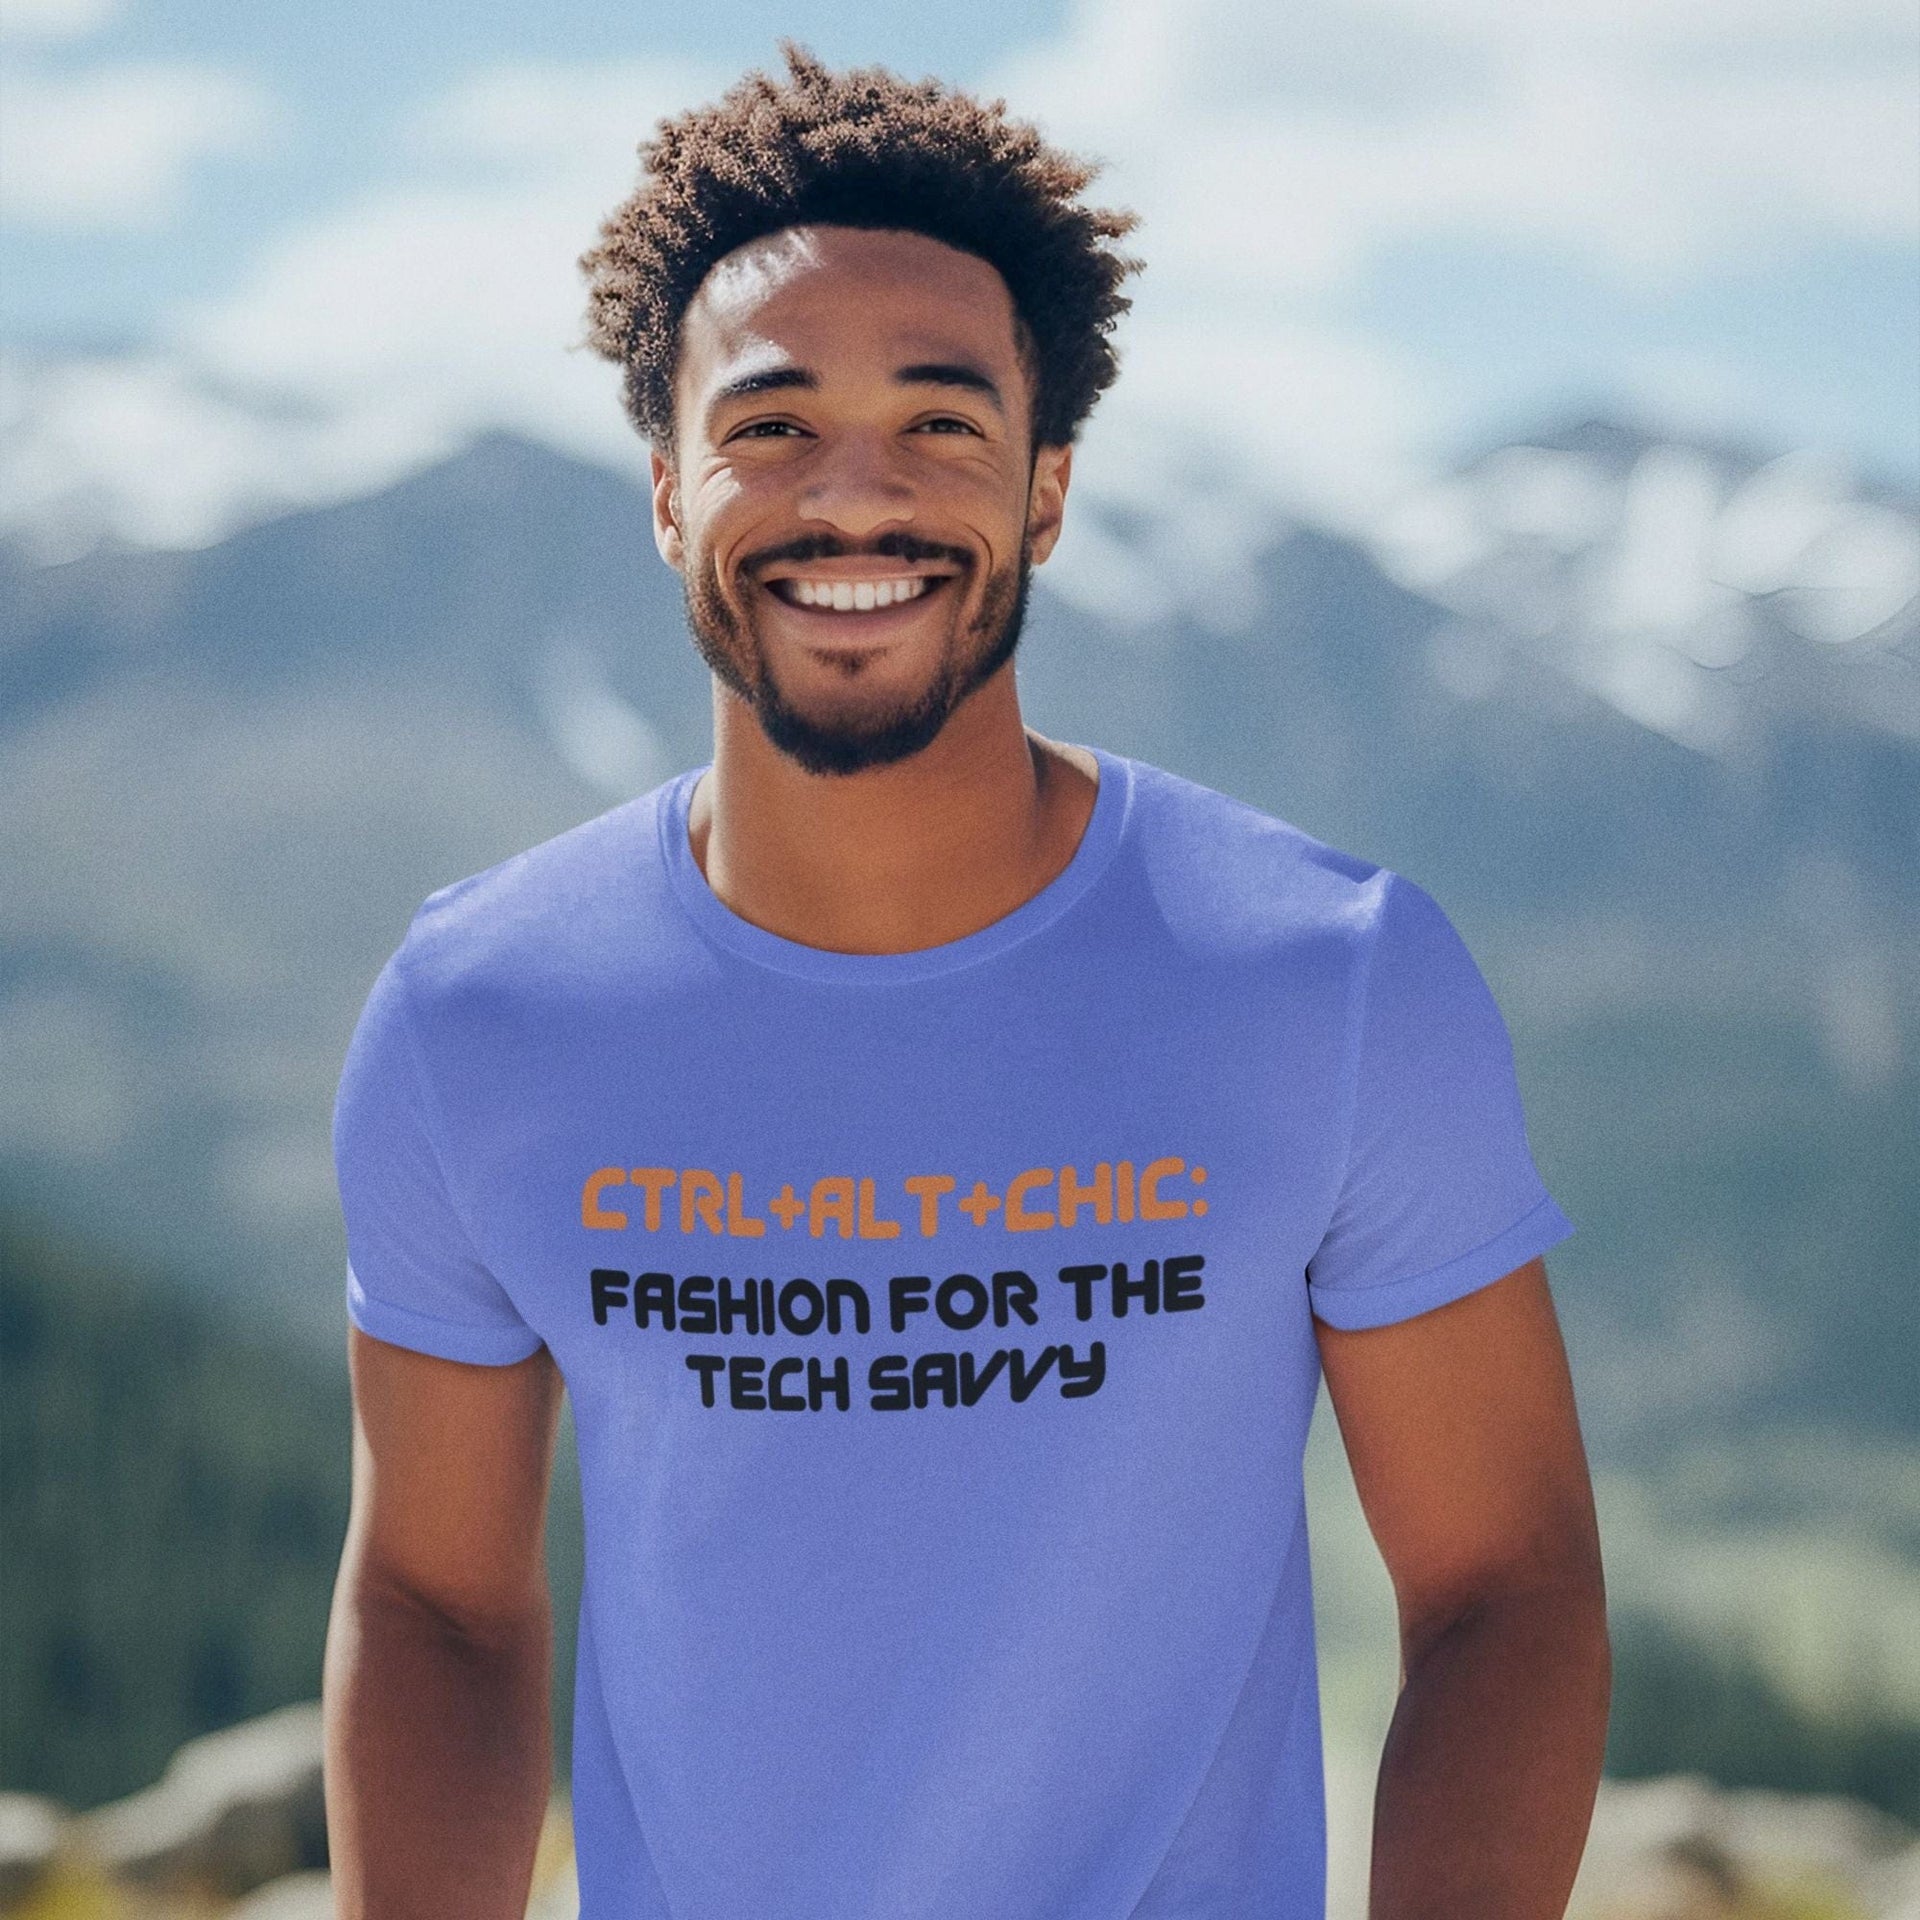 Ctrl+Alt+Chic: Fashion for the Tech Savvy - Men's T-Shirt